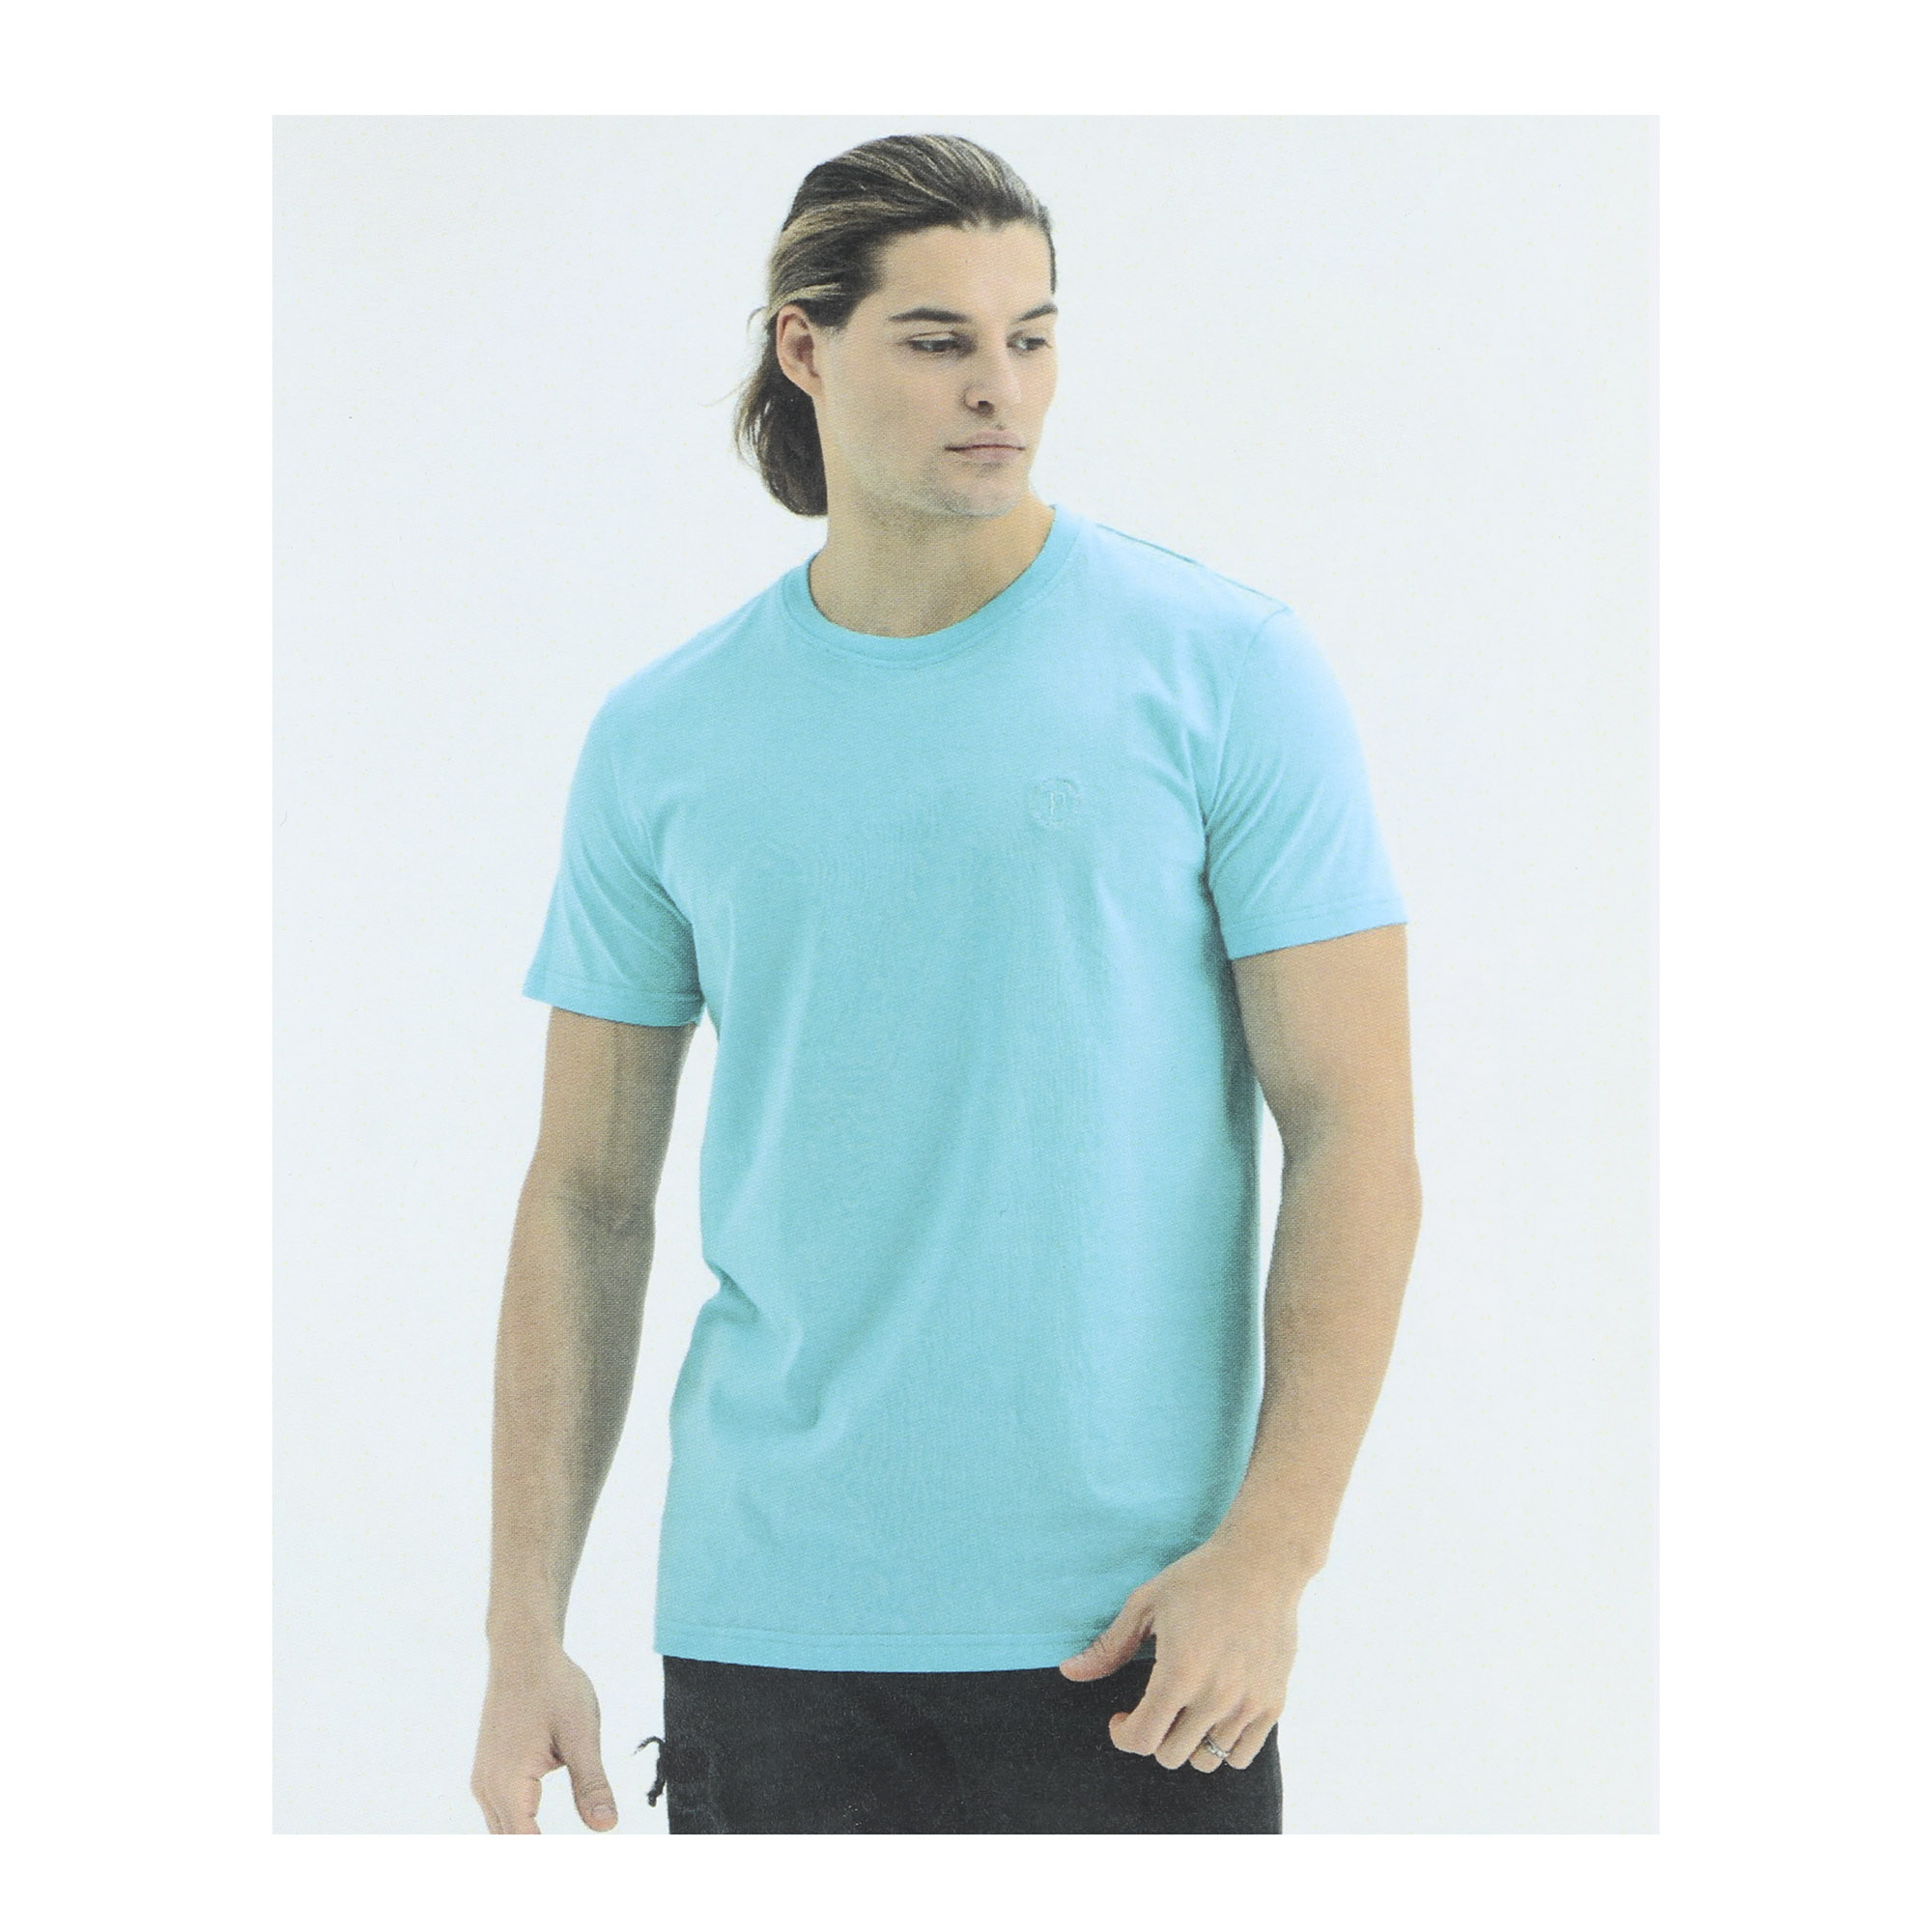 Мужская футболка Pantelemone MF-914 52 ментоловая, цвет ментоловый, размер 52 - фото 4